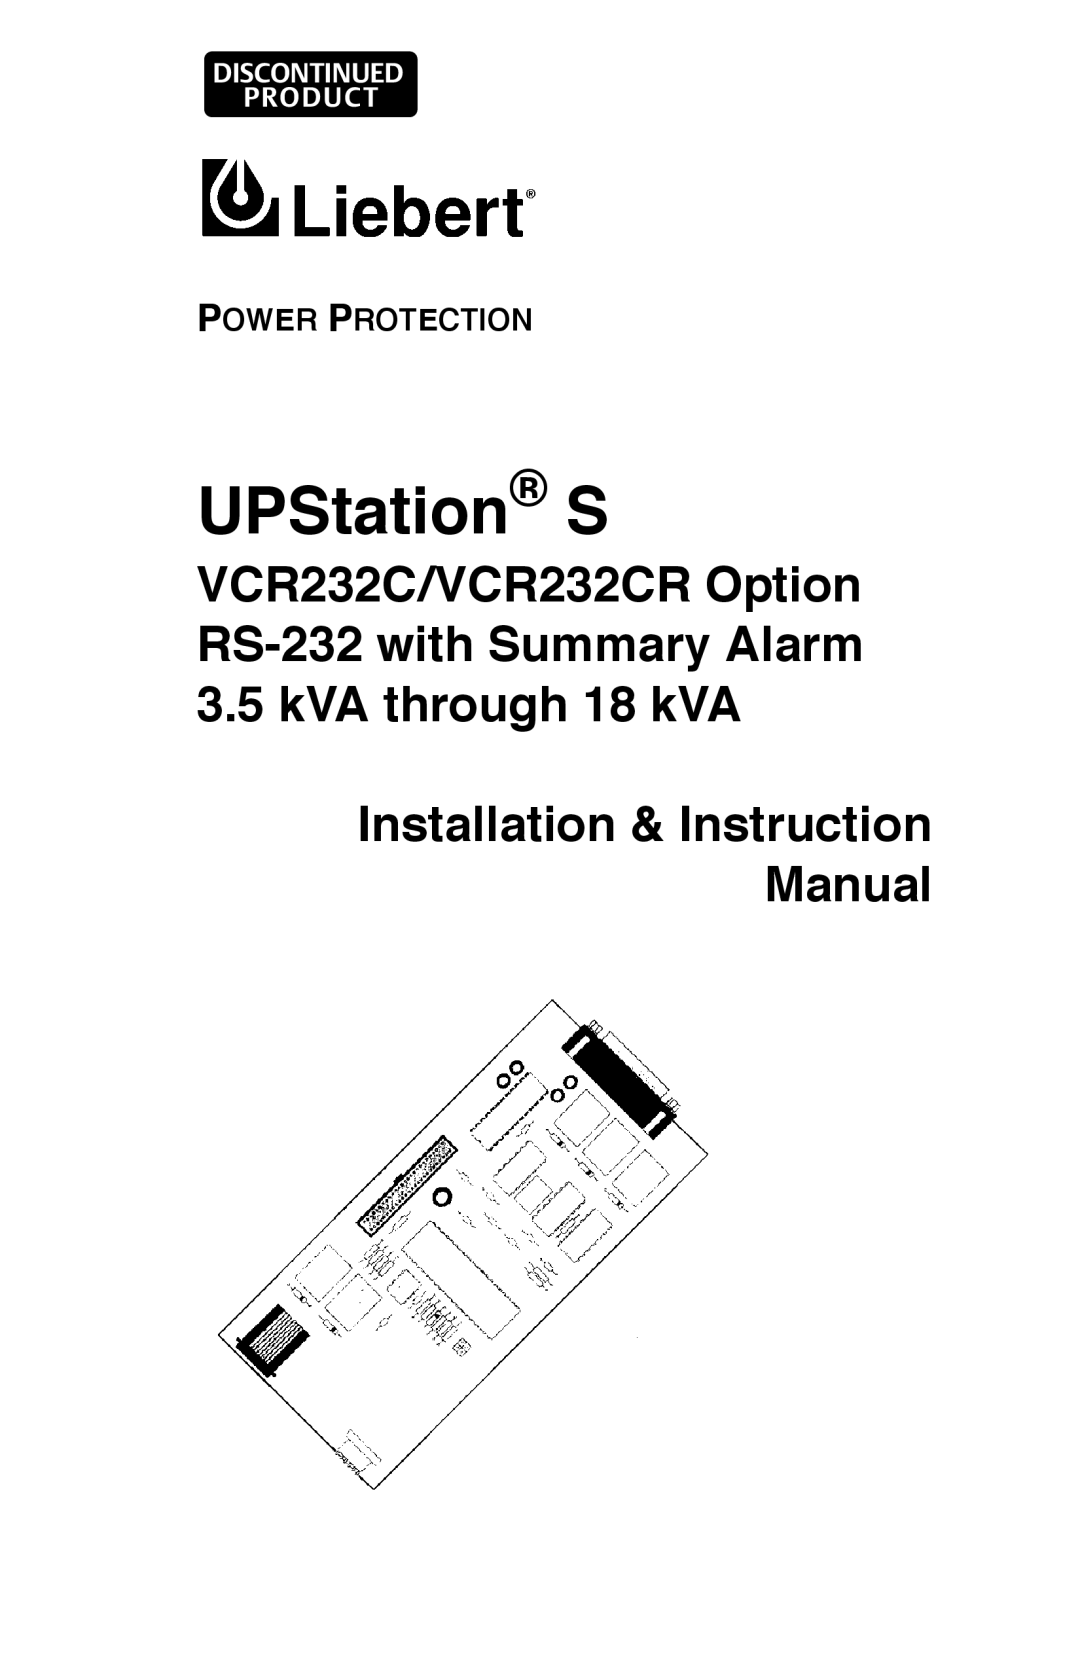 Liebert VCR232C instruction manual Power Protection, UPStation S, Installation & Instruction Manual, Discontinued Product 